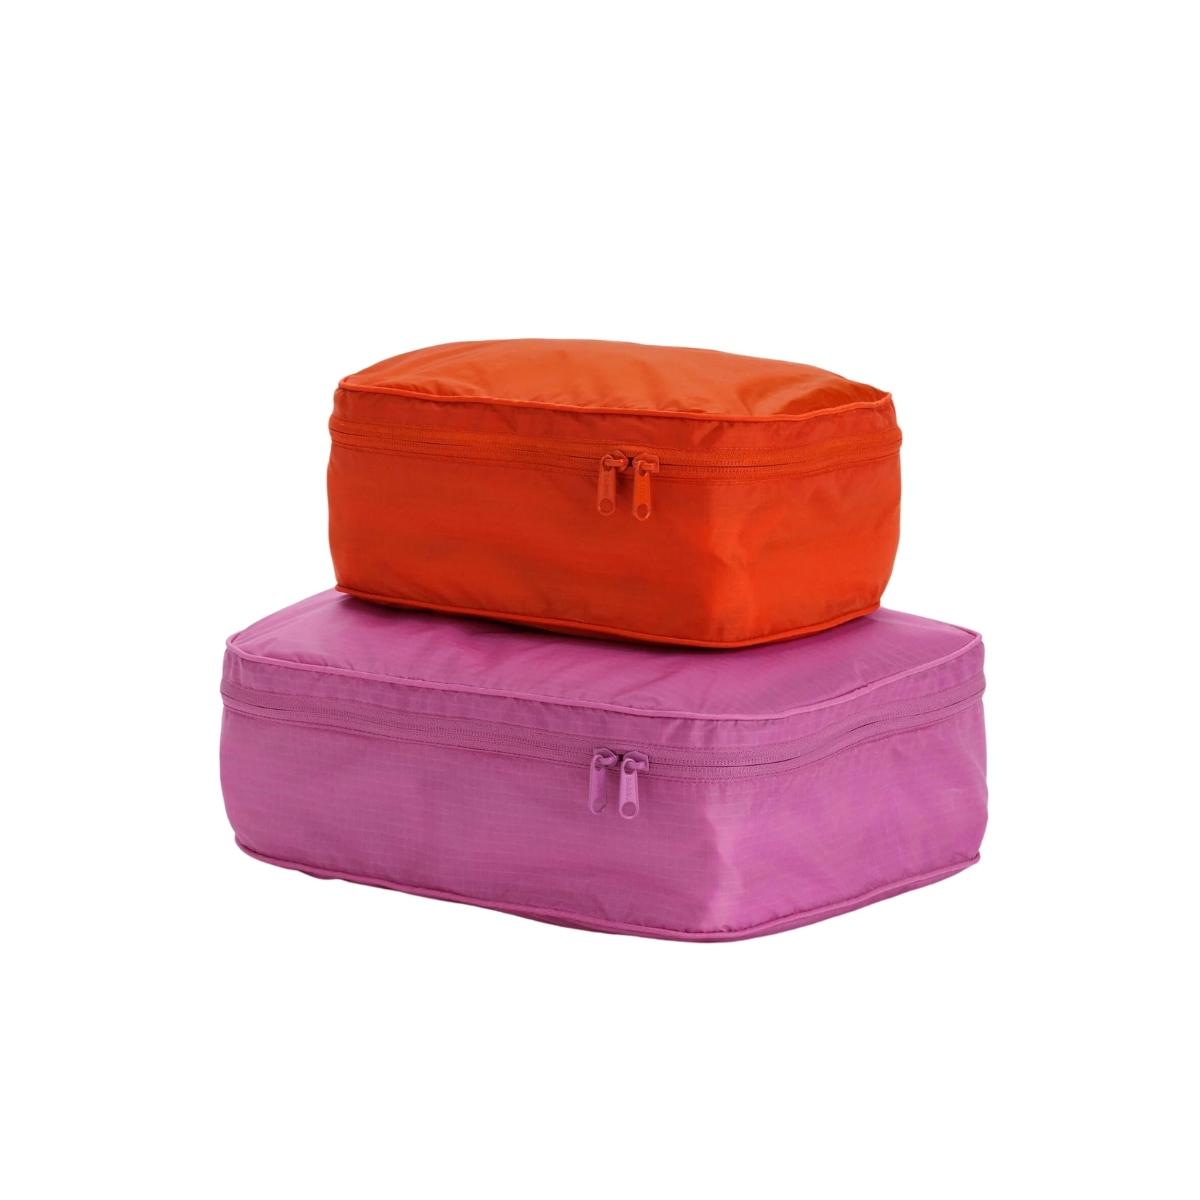 Baggu Packing Cube Set in Lipstick